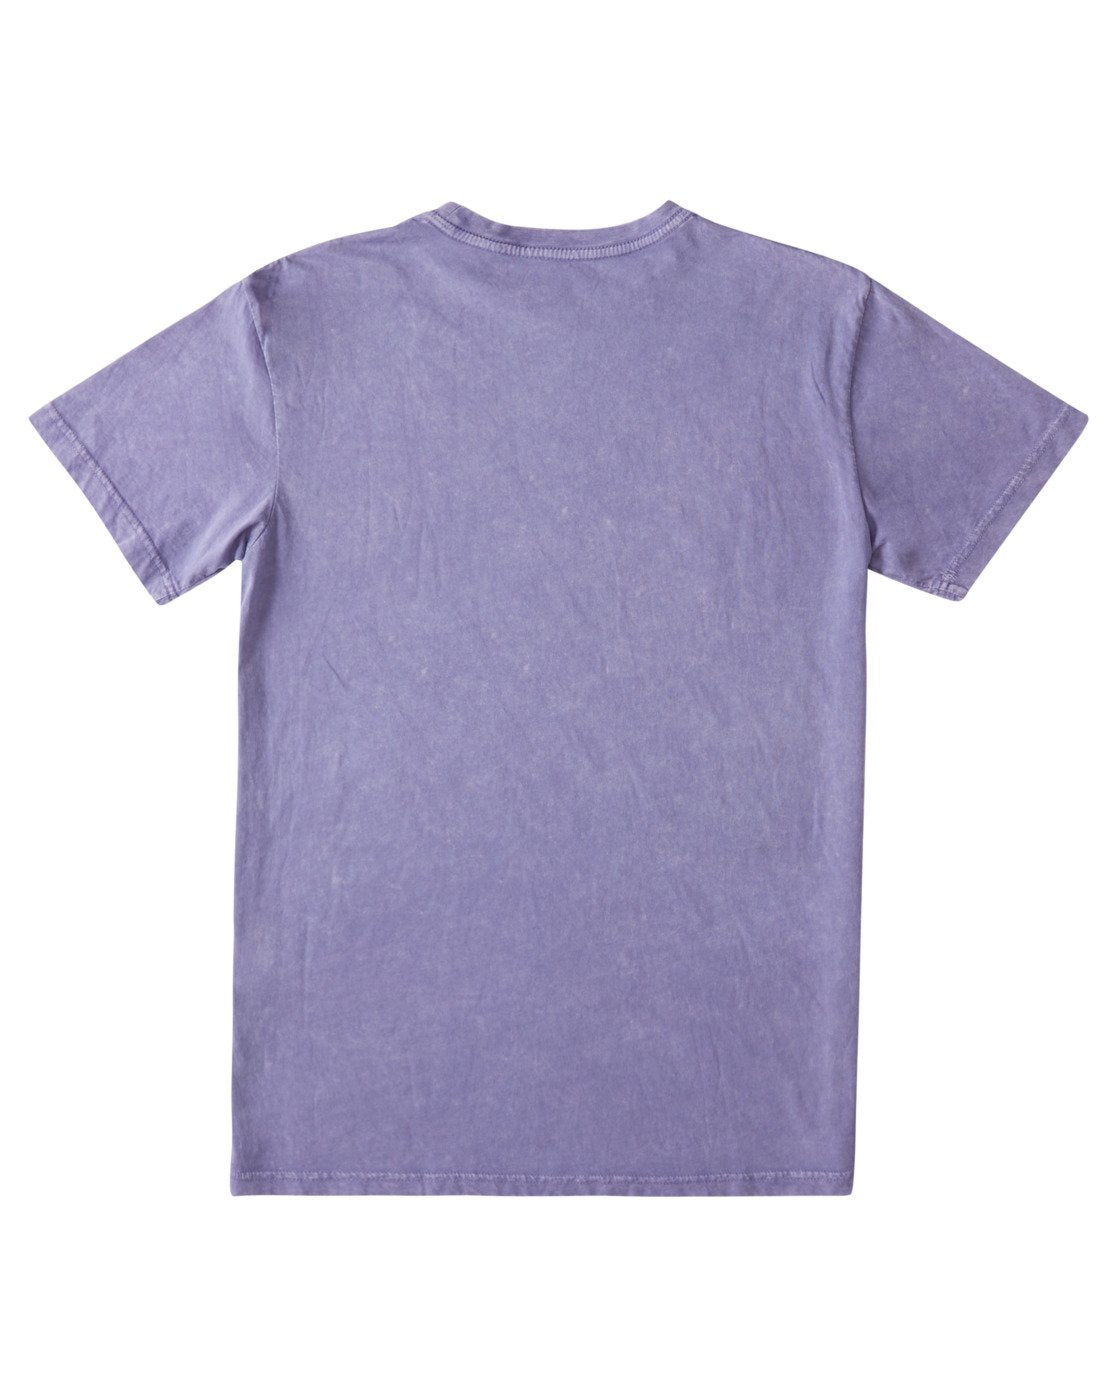 Element - Mineral Wash Short Sleeve T-Shirt